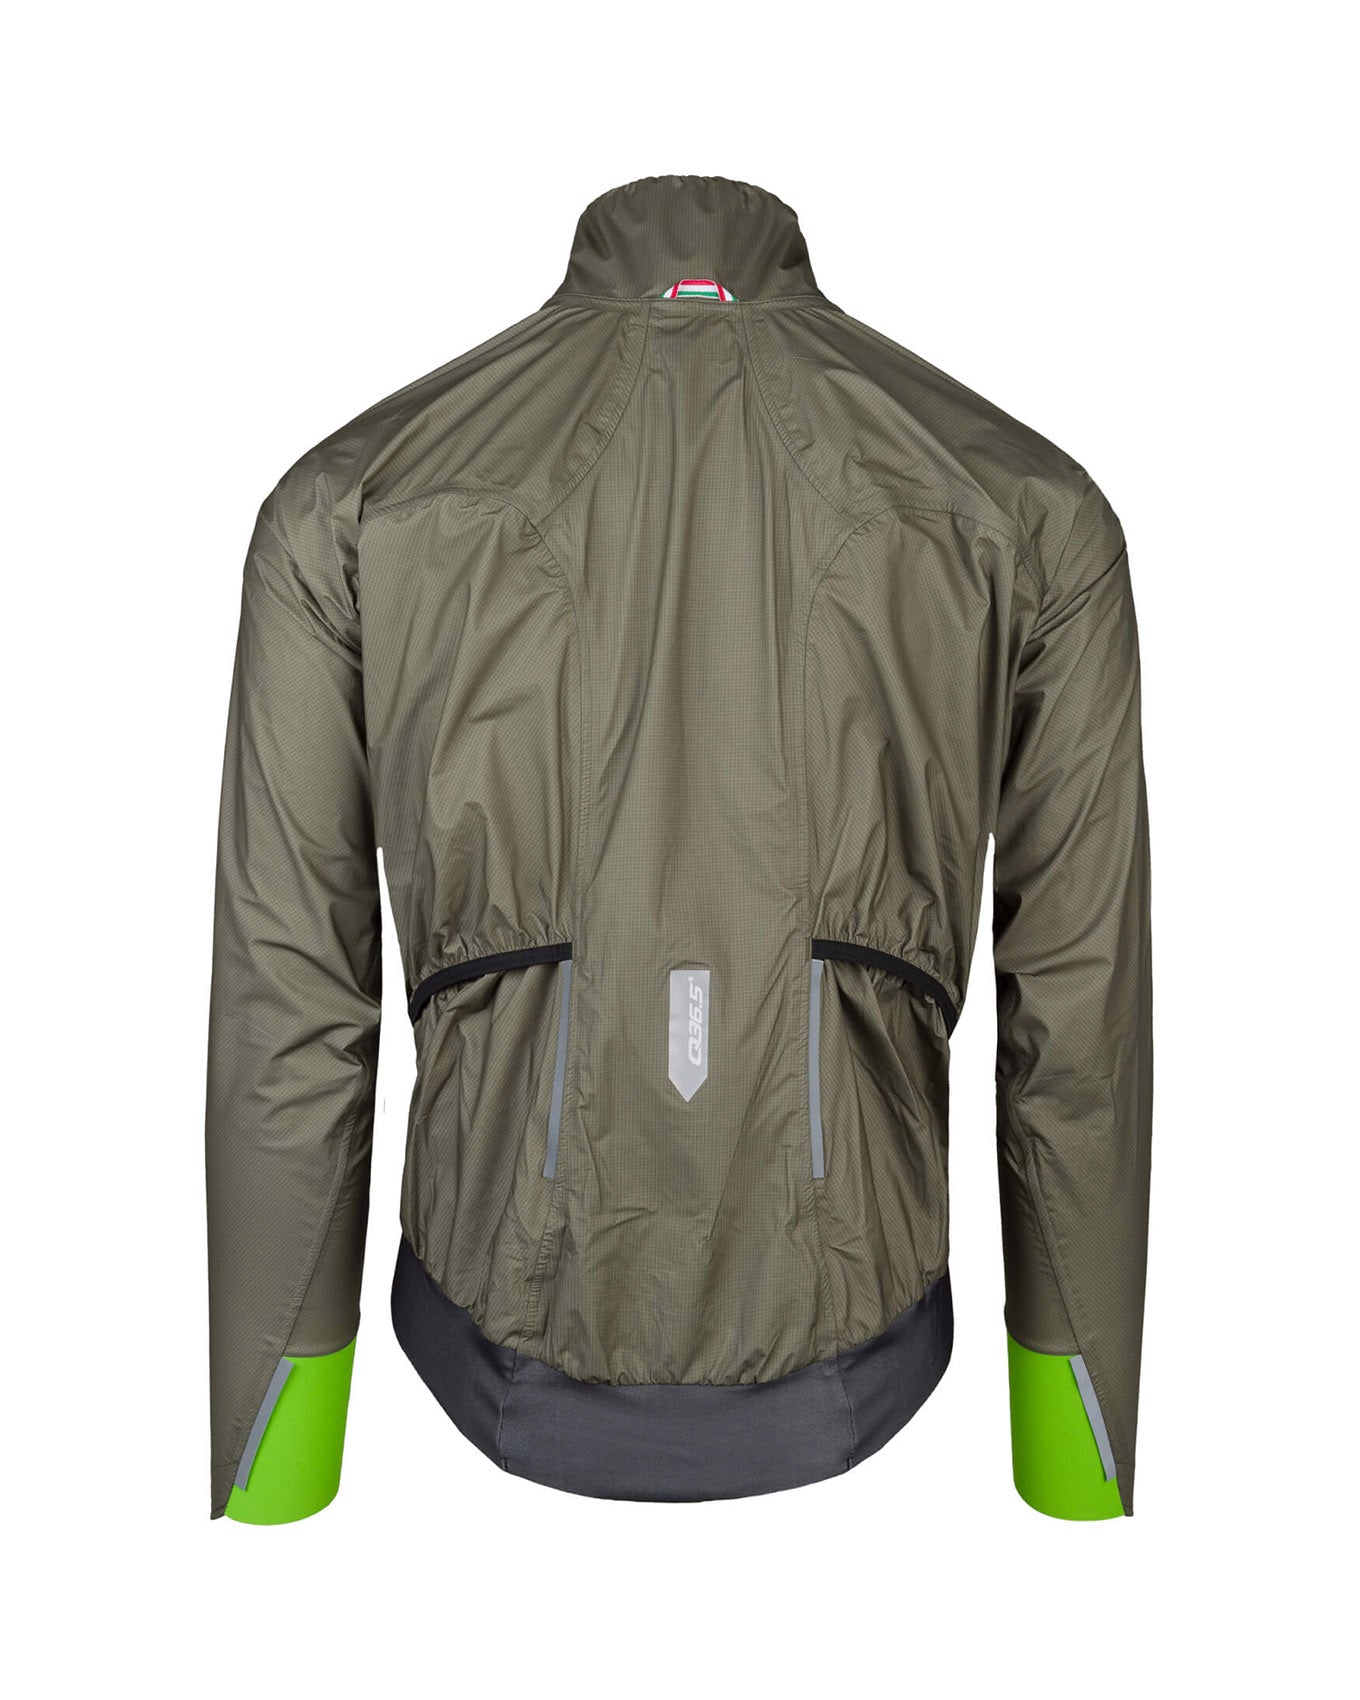 Mens cycling jackets: waterproof, rain & winter jackets • Q36.5